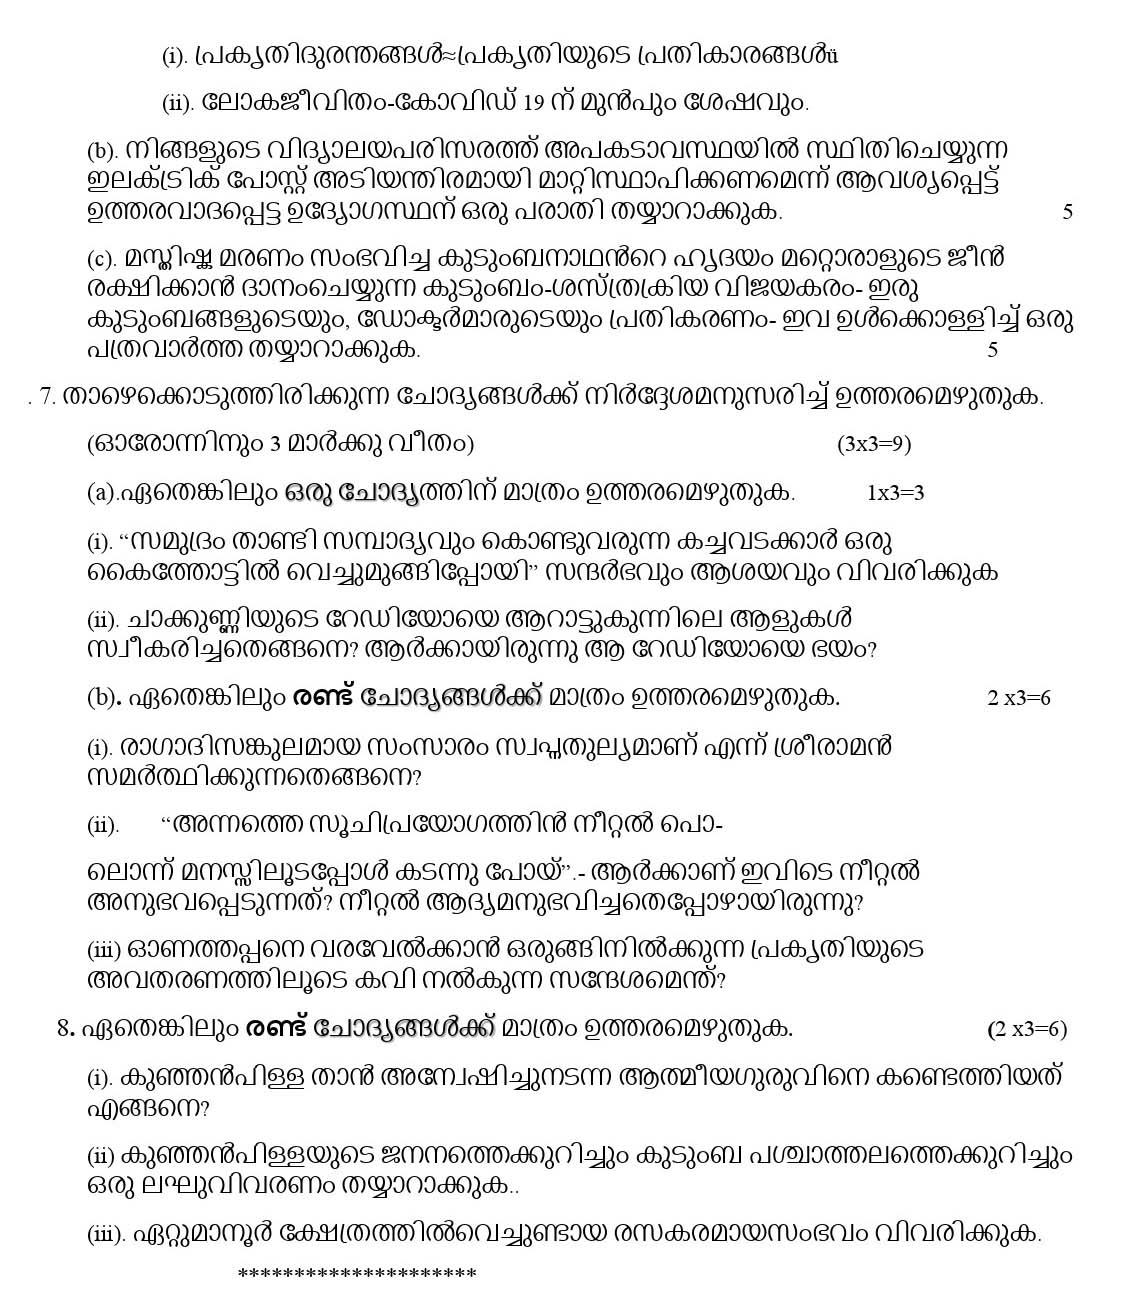 Malayalam CBSE Class X Sample Question Paper 2020 21 - Image 7